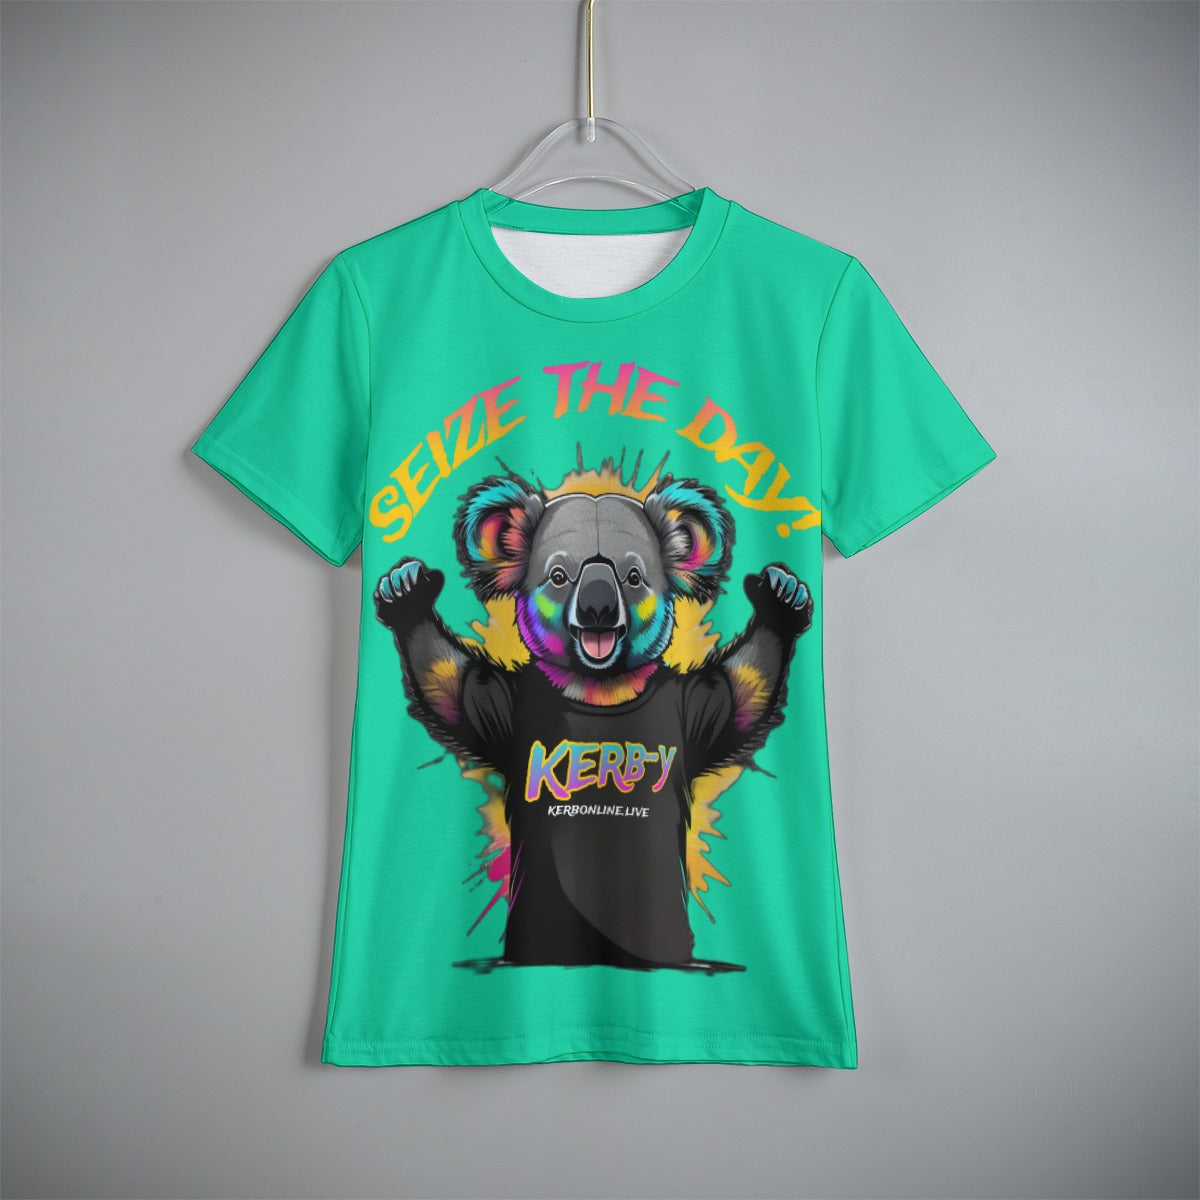 KERB DJ KERBY Seize the Day Kid's T-Shirt